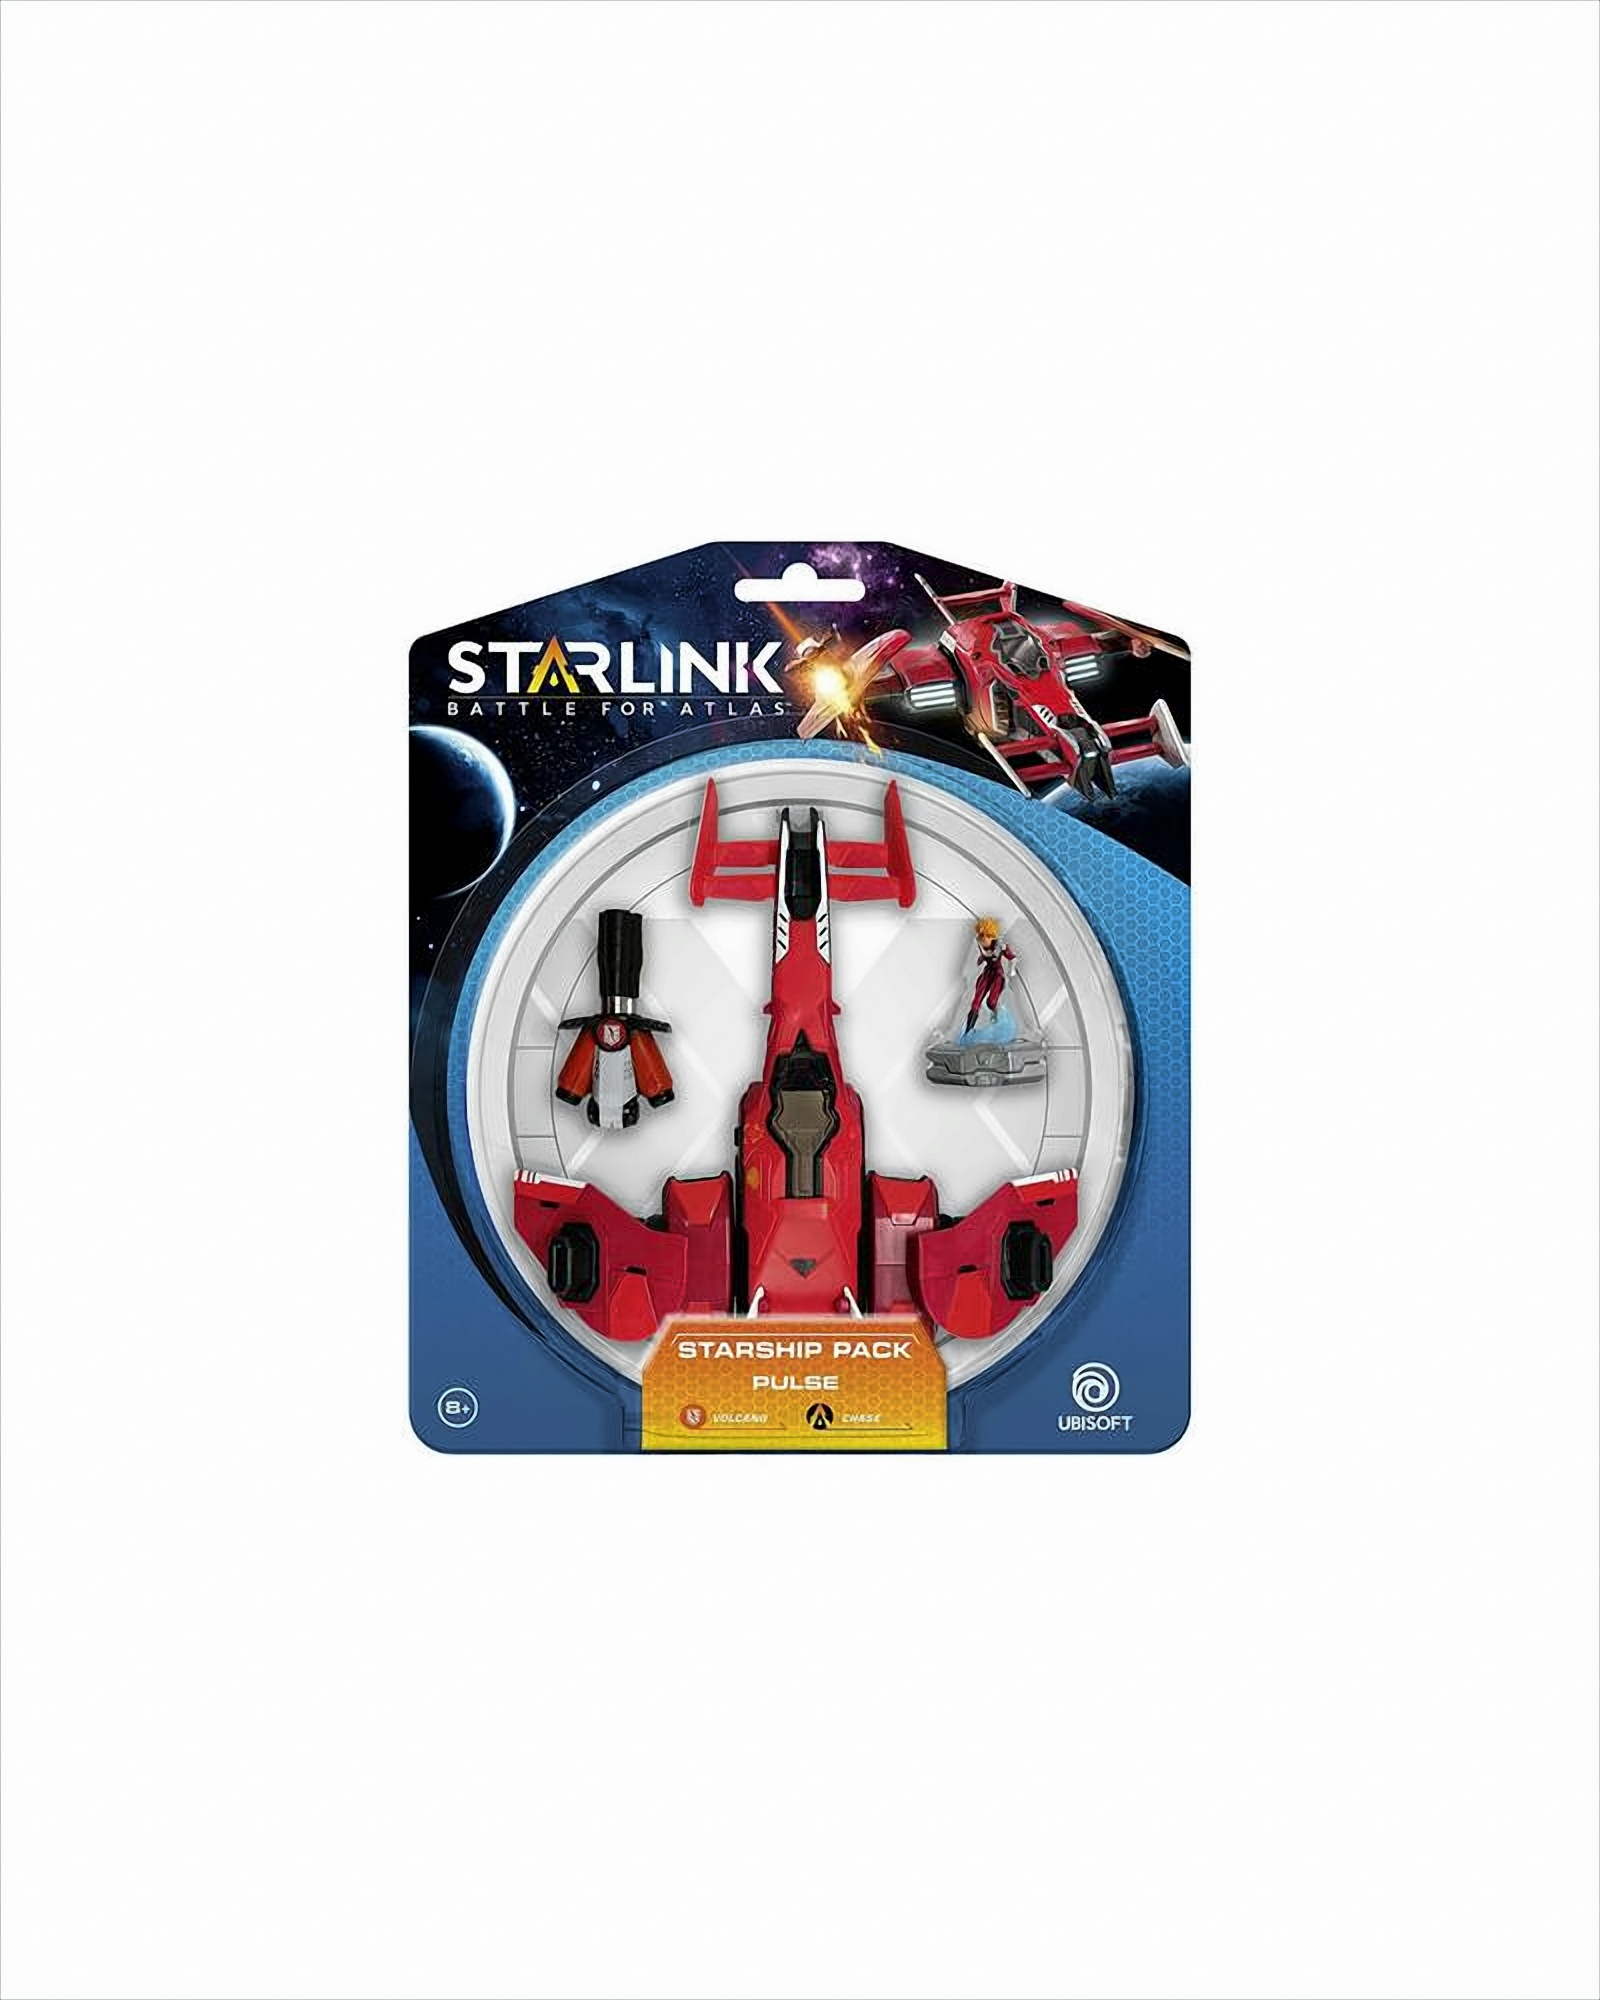 Starlink: Battle for Atlas - Starship Pack - Pulse von Ubi Soft